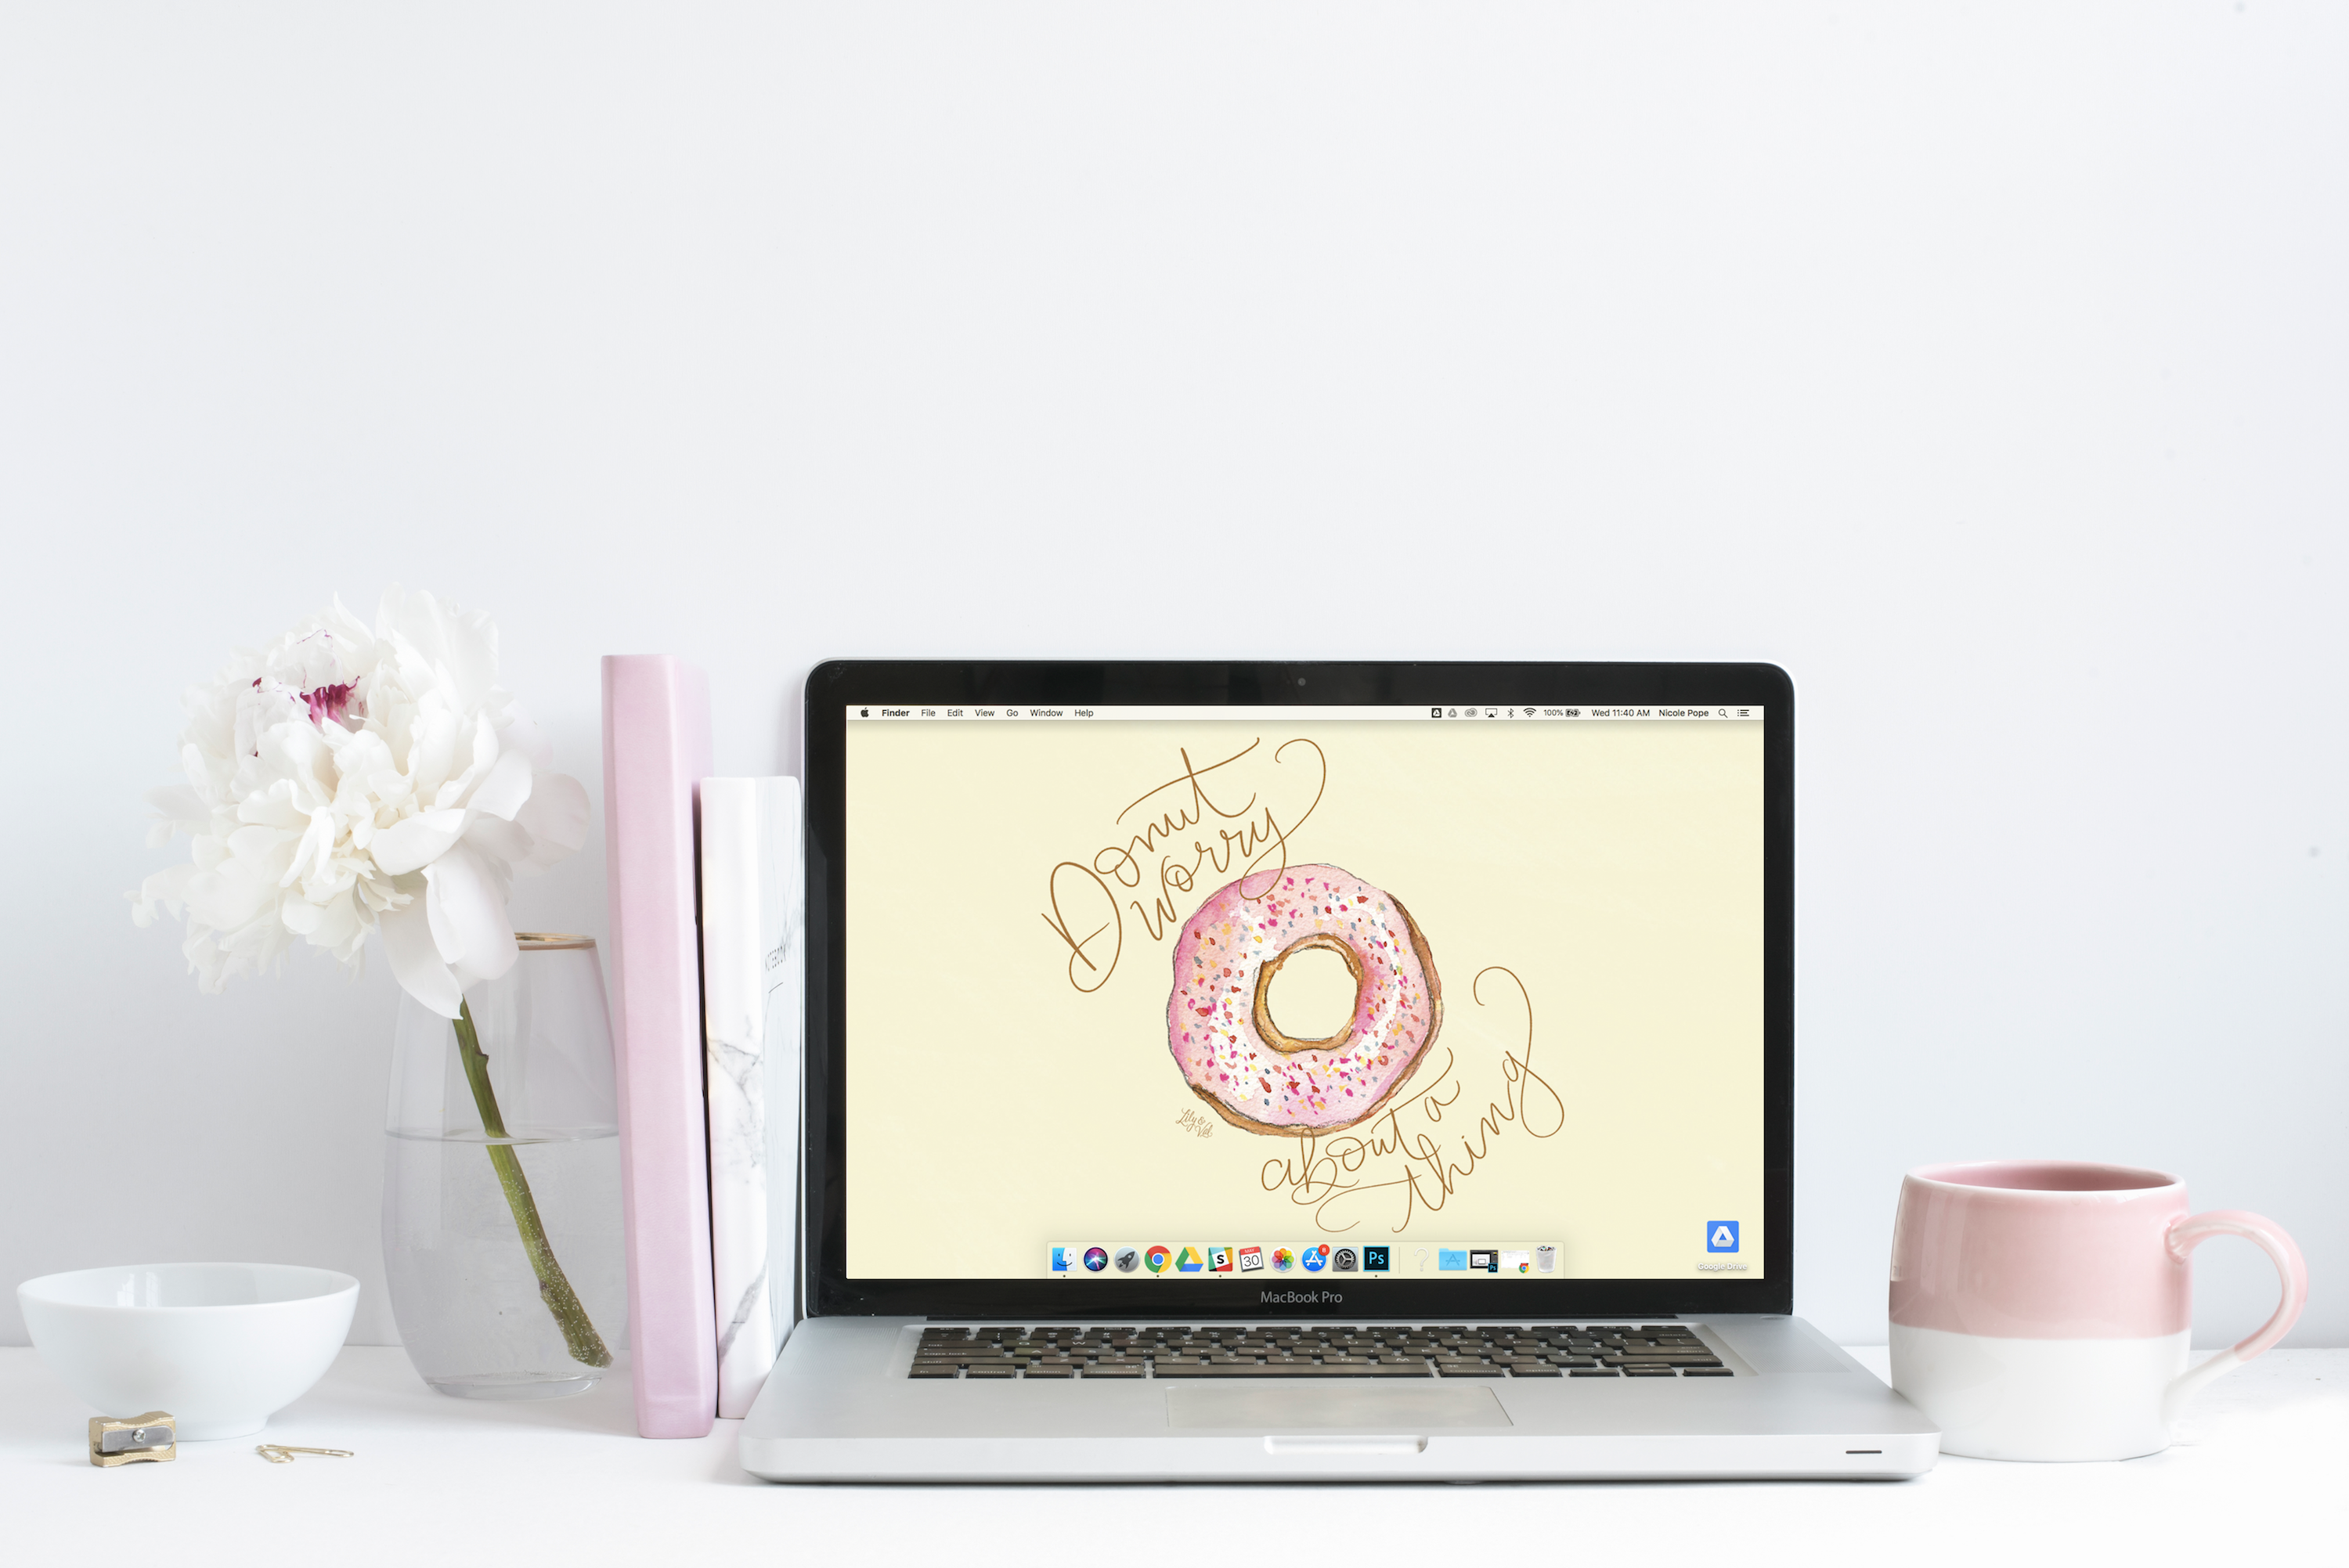 Lily & Val's Free June Donut desktop wallpaper download